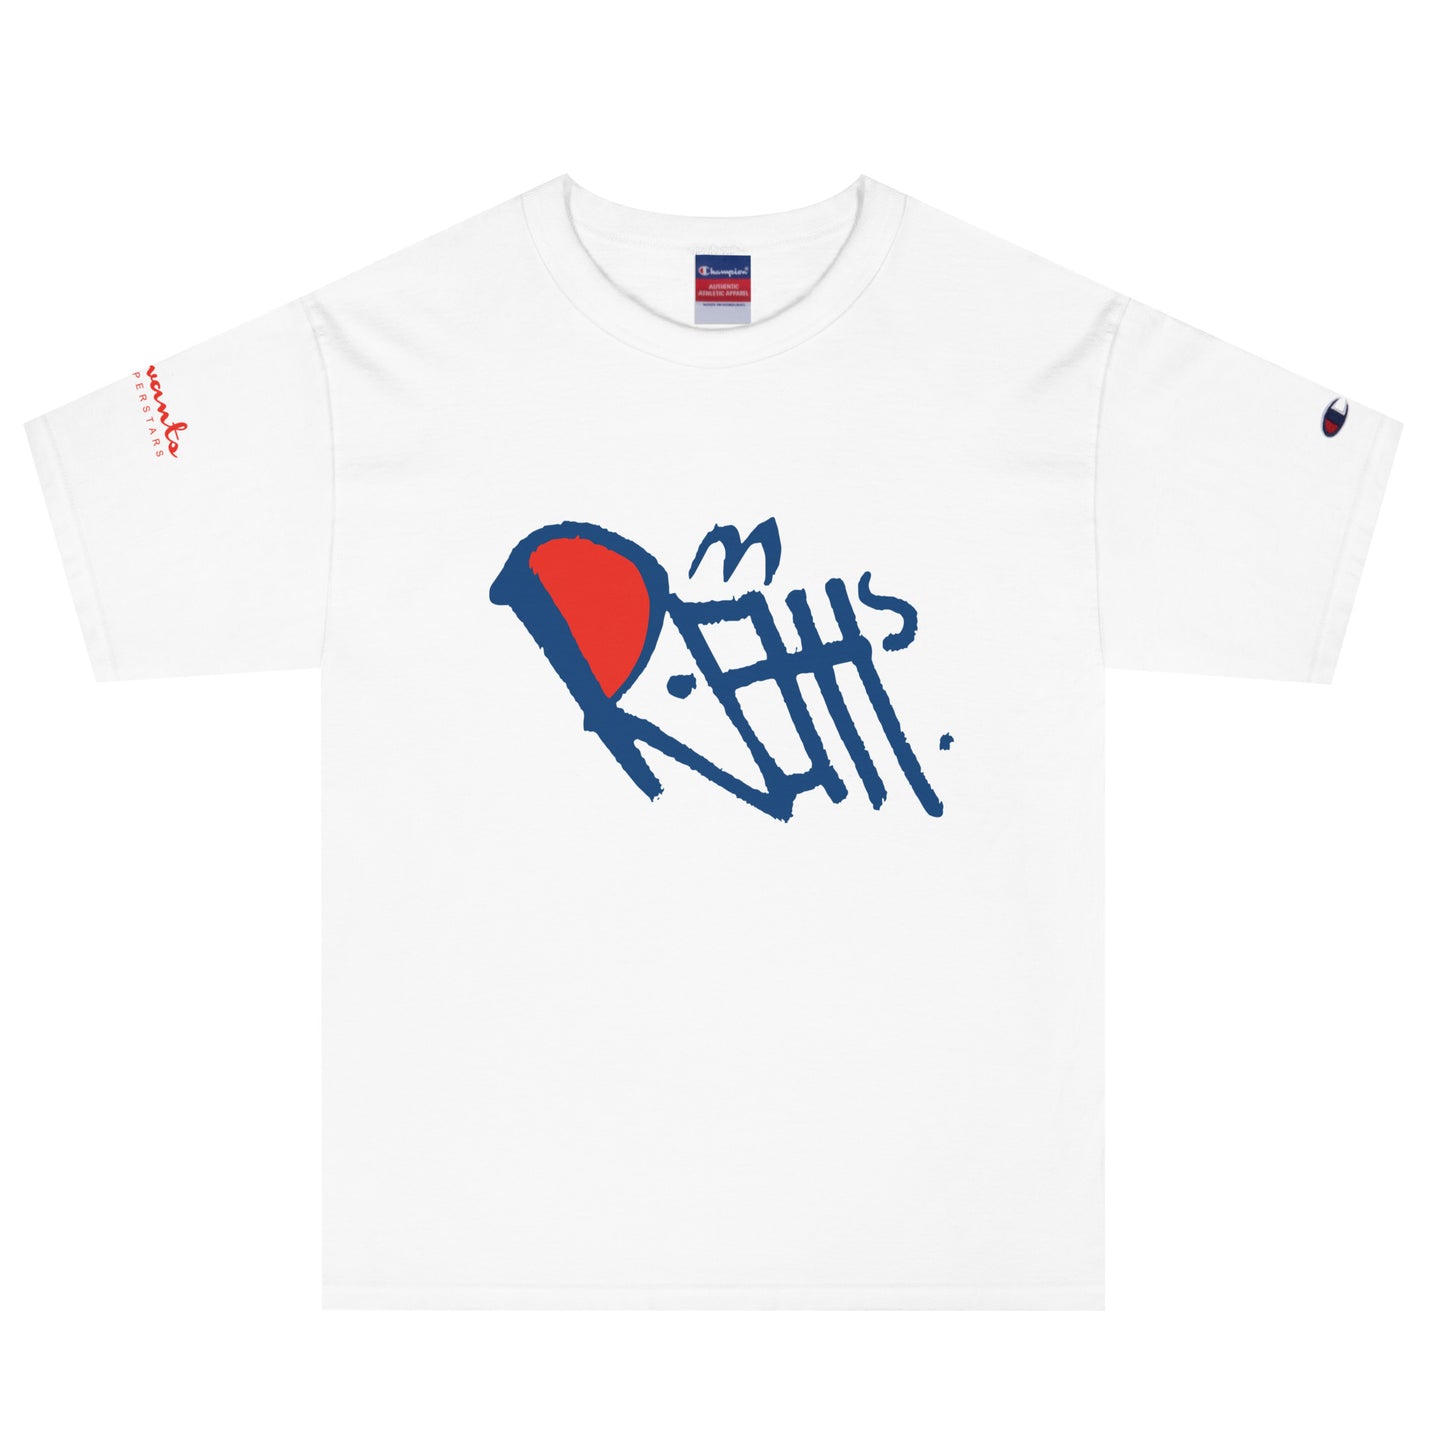 SNS - Champion T-Shirt (White)